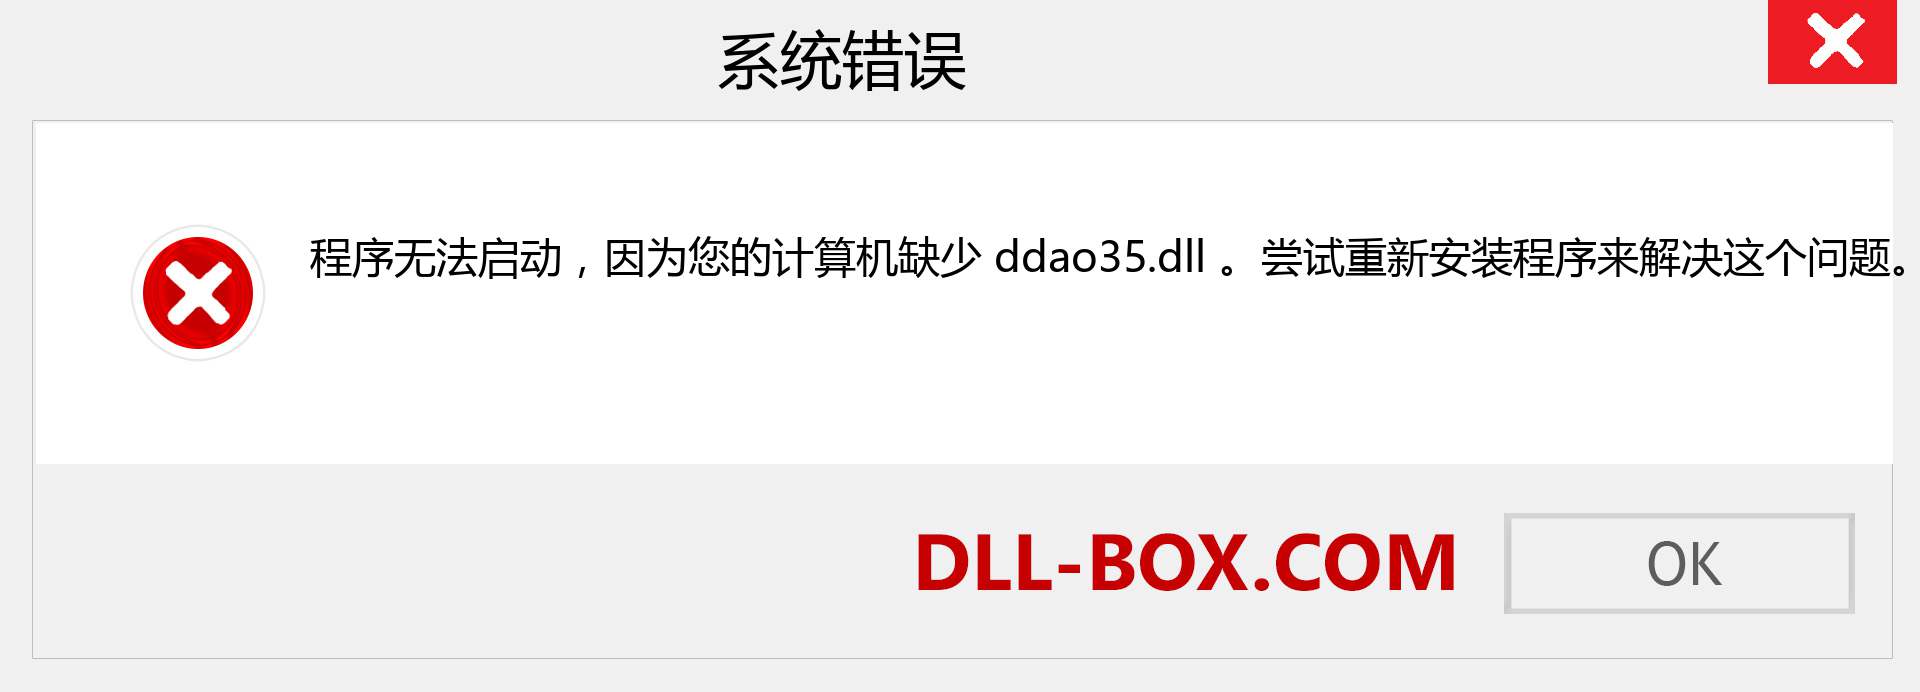 ddao35.dll 文件丢失？。 适用于 Windows 7、8、10 的下载 - 修复 Windows、照片、图像上的 ddao35 dll 丢失错误